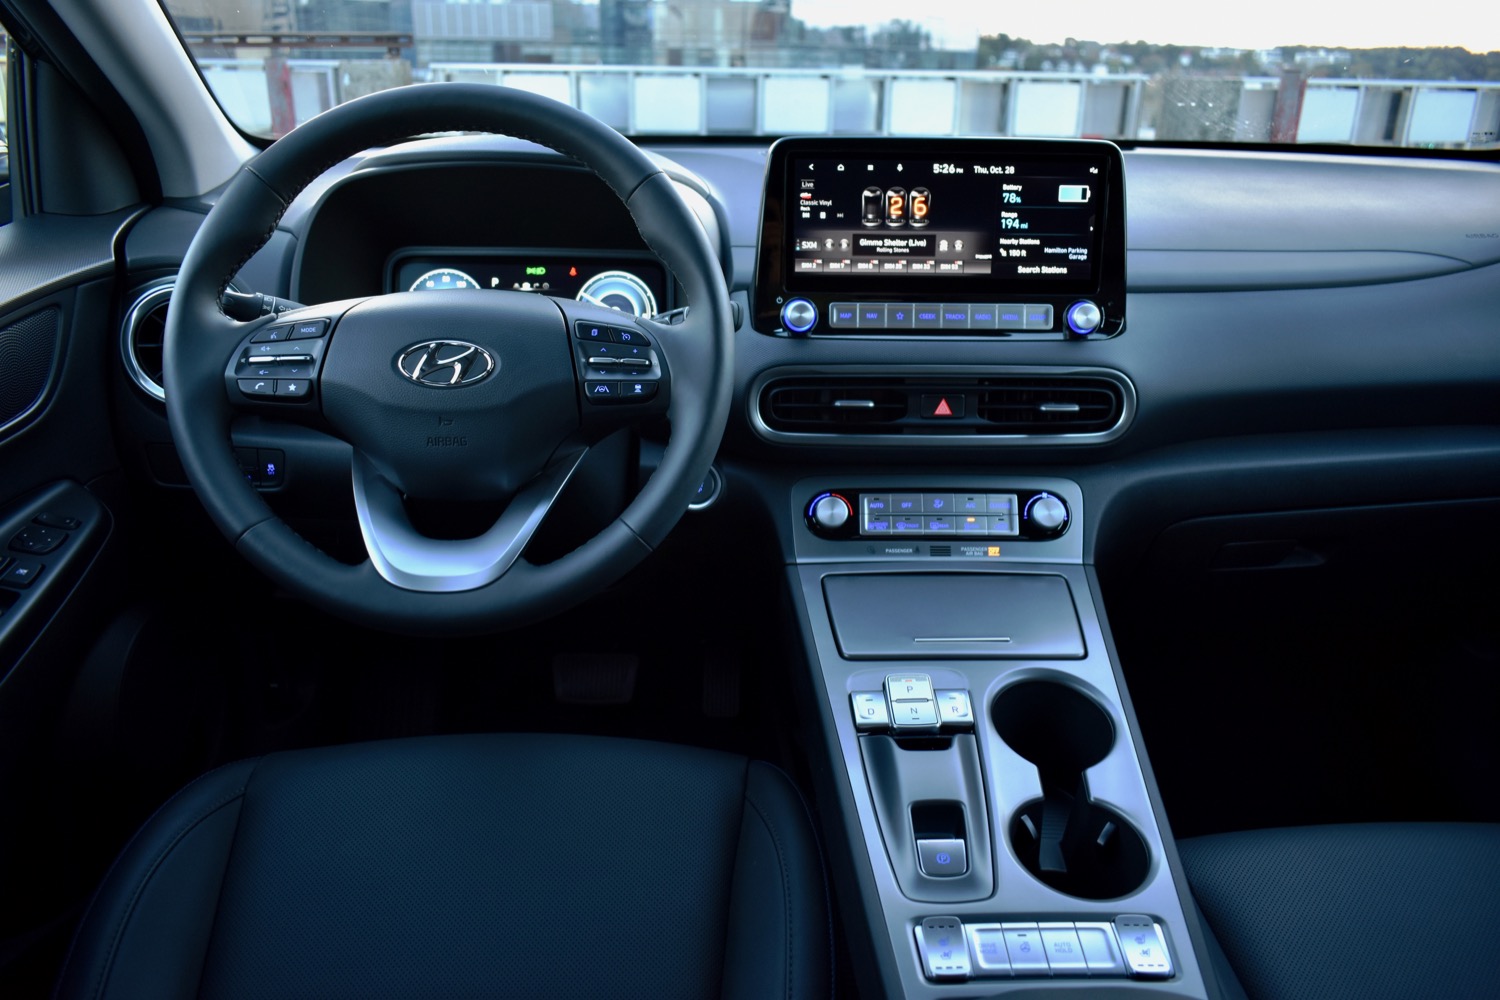 2021 Hyundai Kona Electric Interior - YouTube